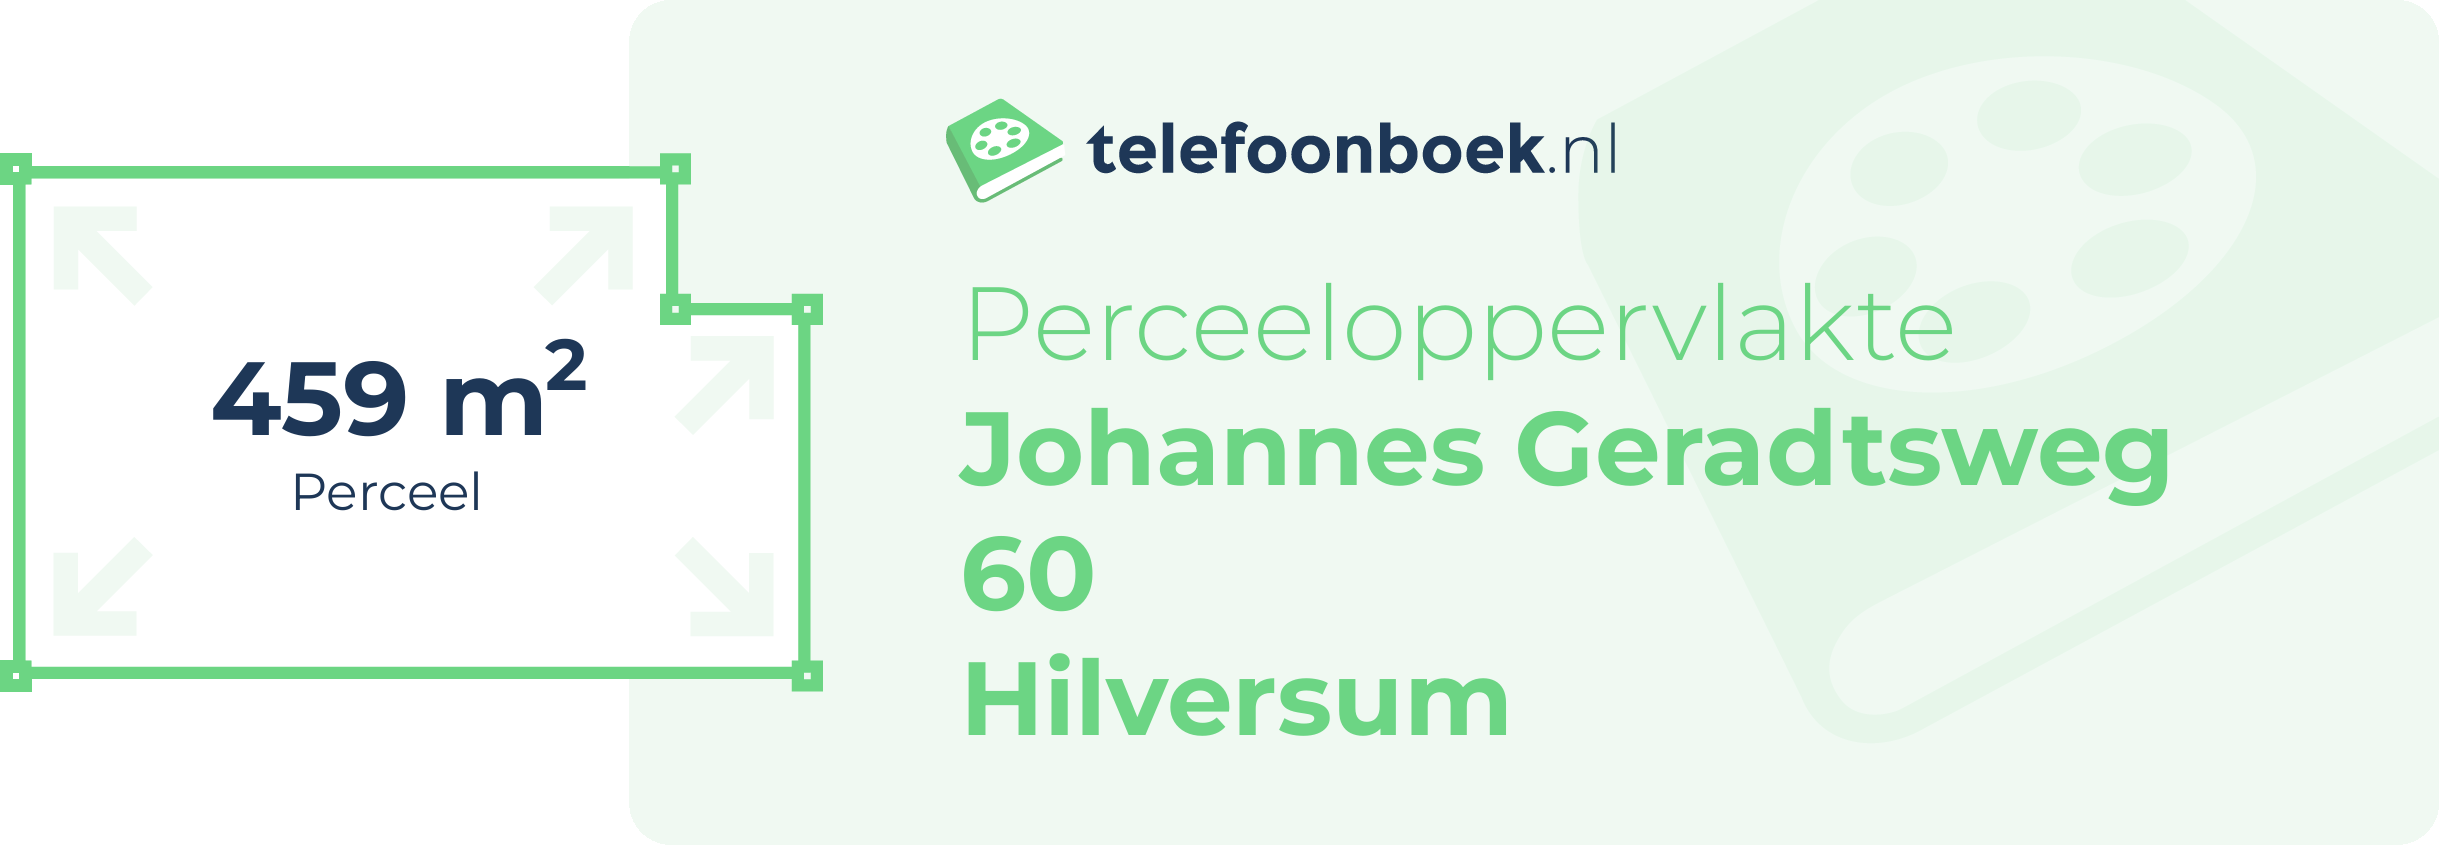 Perceeloppervlakte Johannes Geradtsweg 60 Hilversum